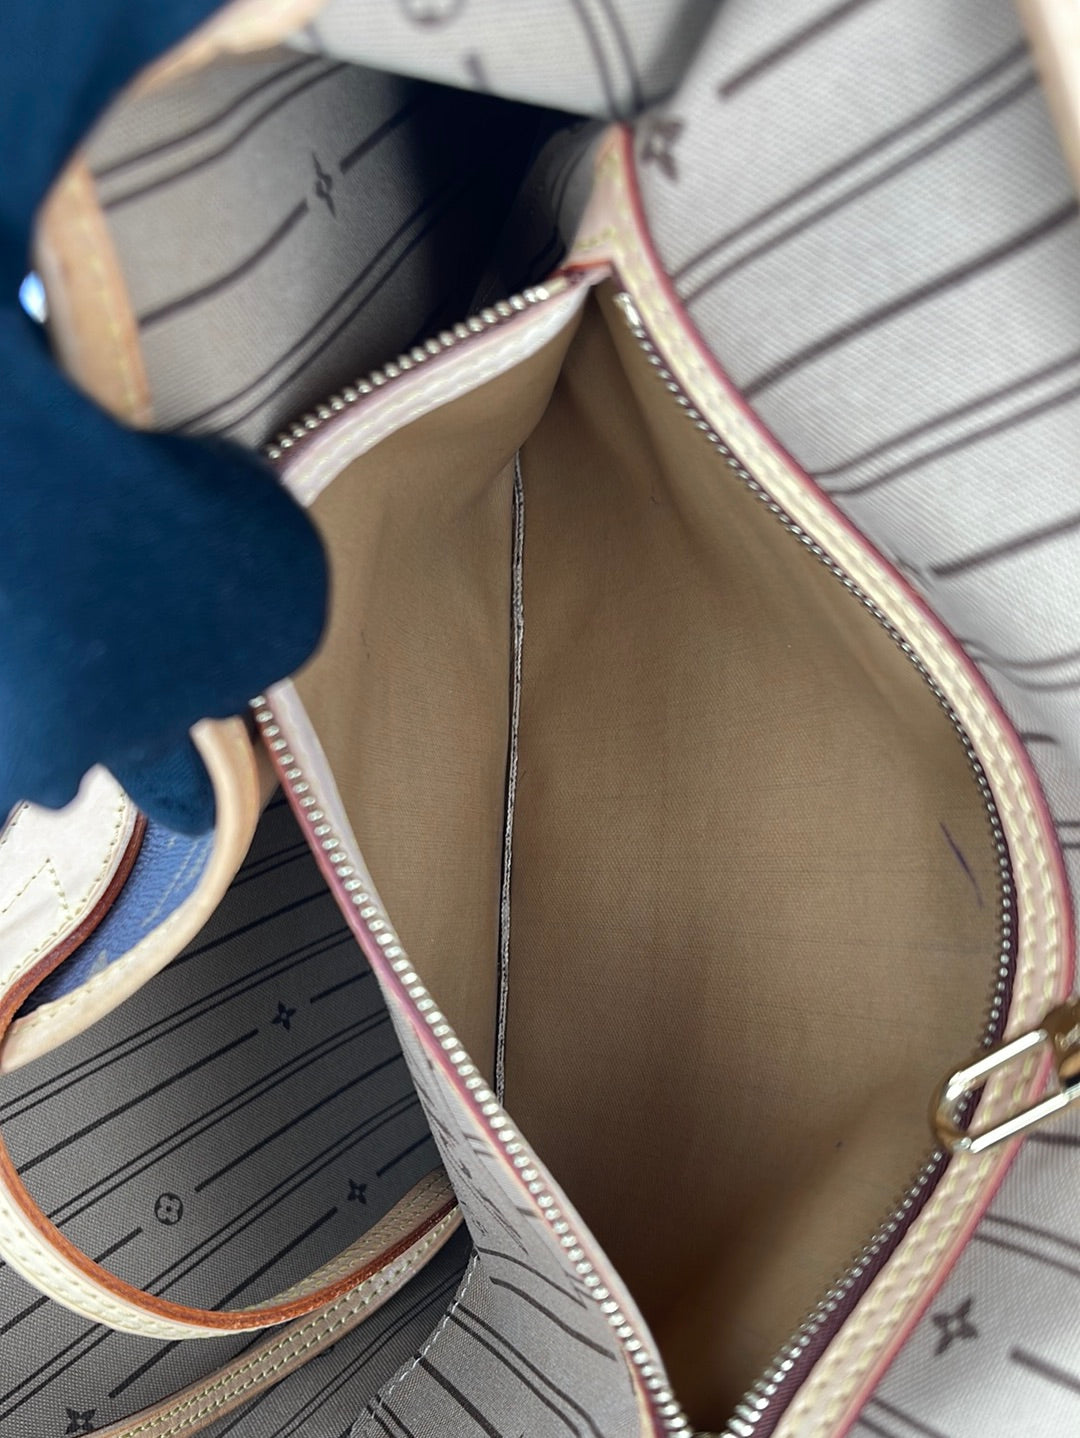 🔥 Preloved Louis Vuitton Monogram Neverfull MM Tote Bag (maroon